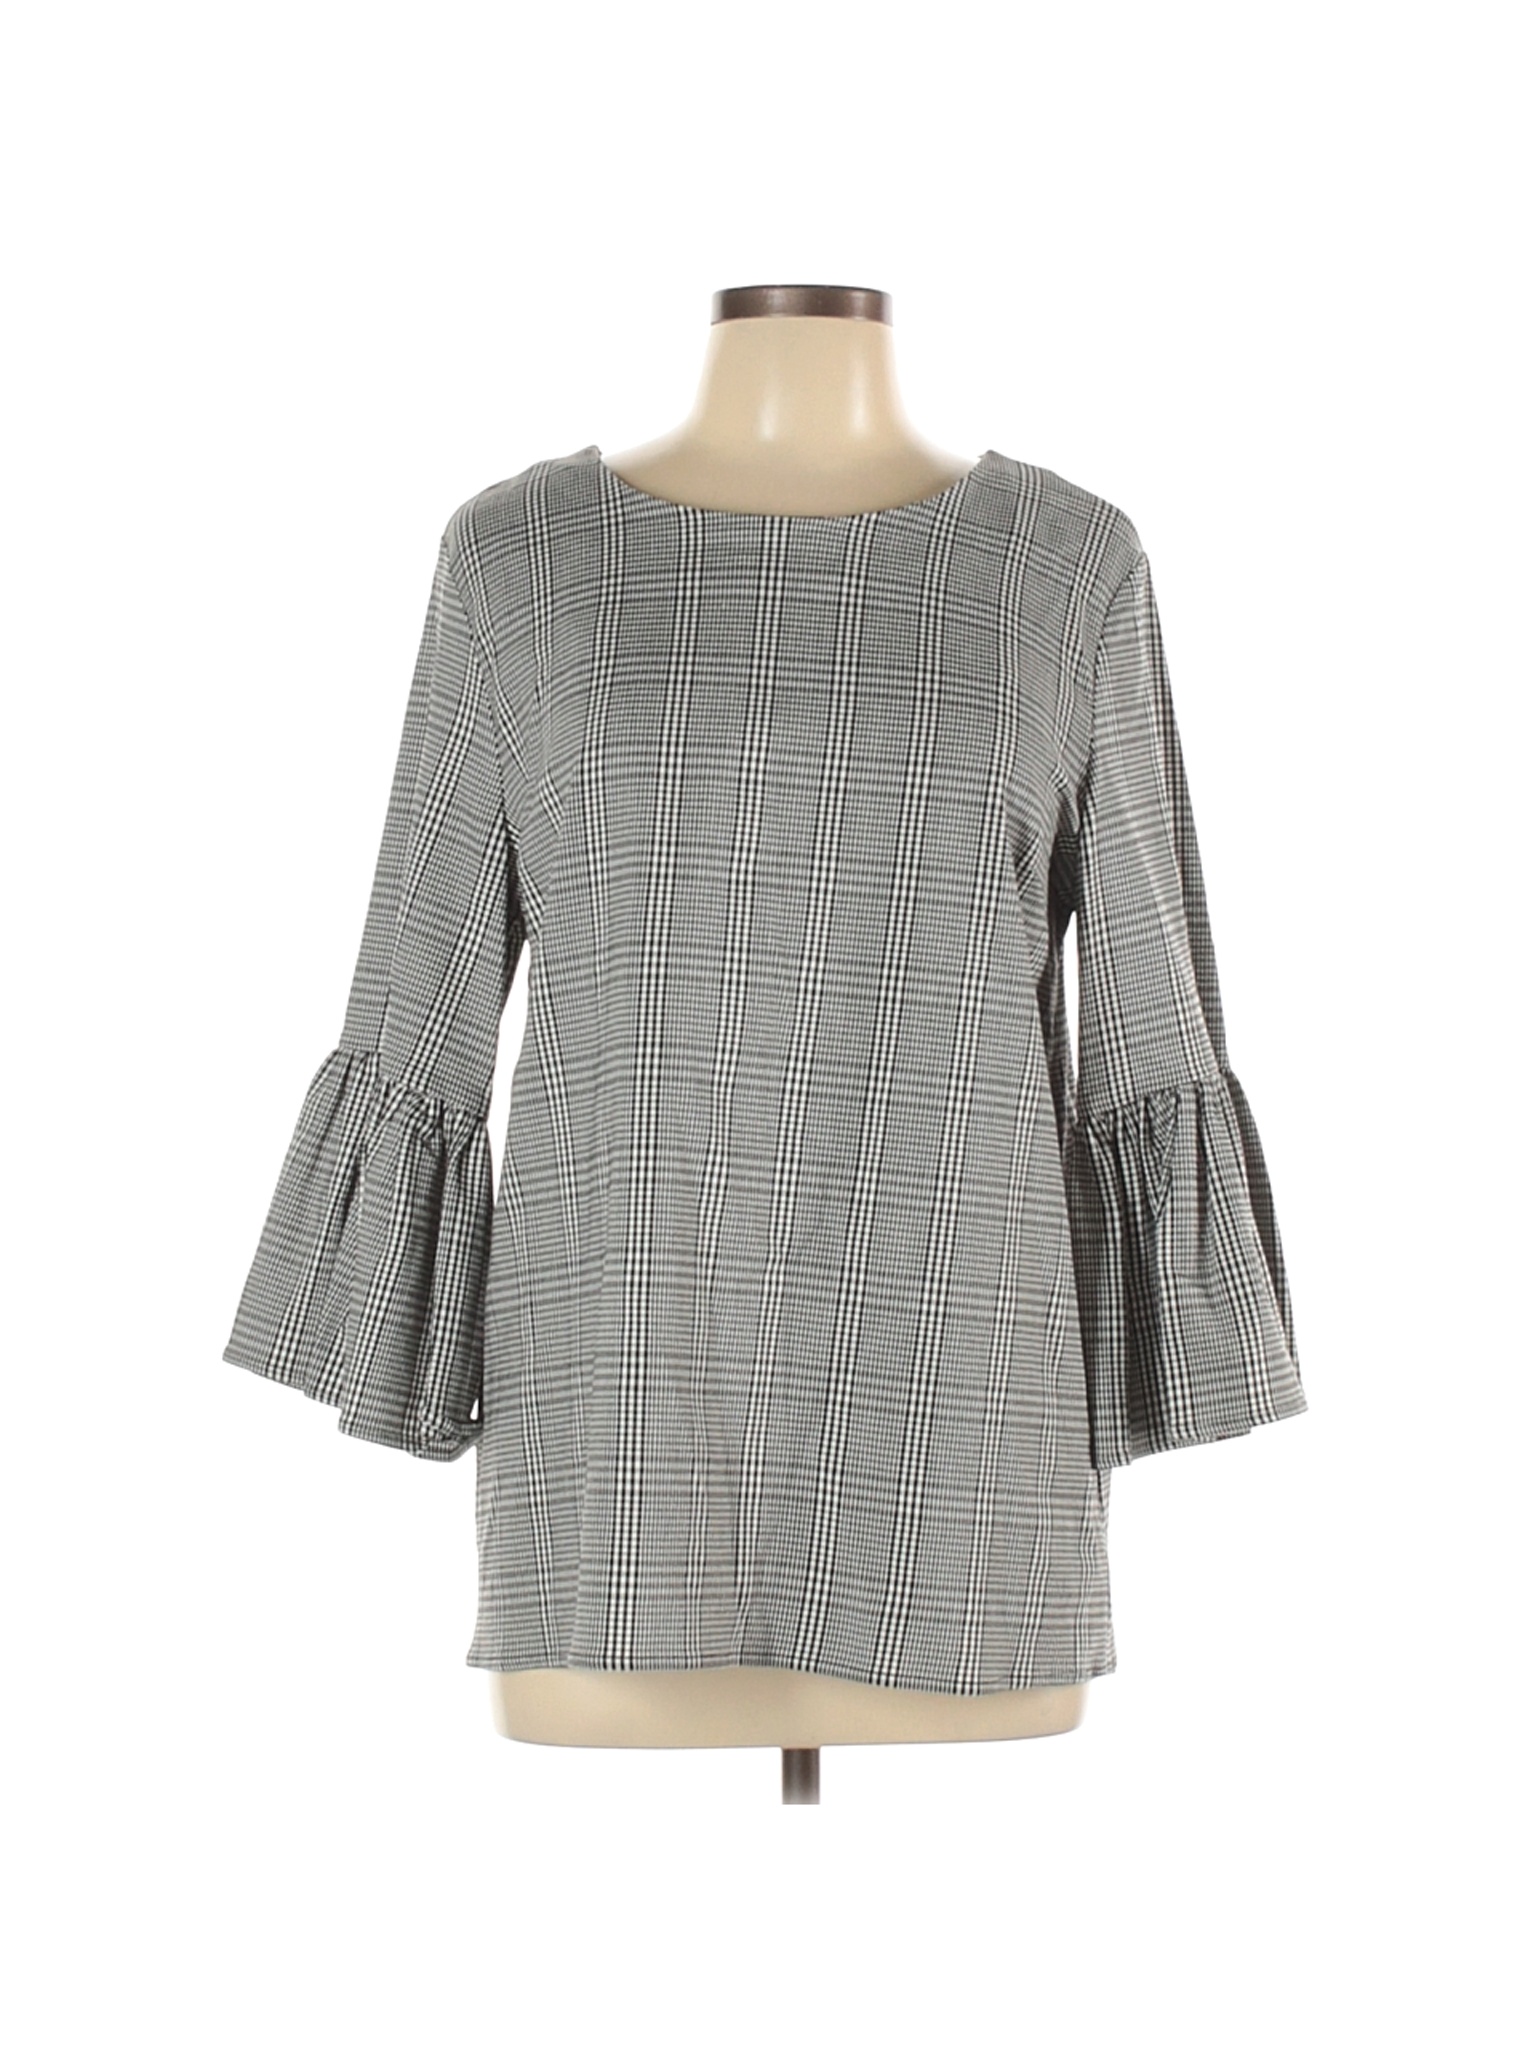 Calvin Klein Women Gray 3/4 Sleeve Top L | eBay